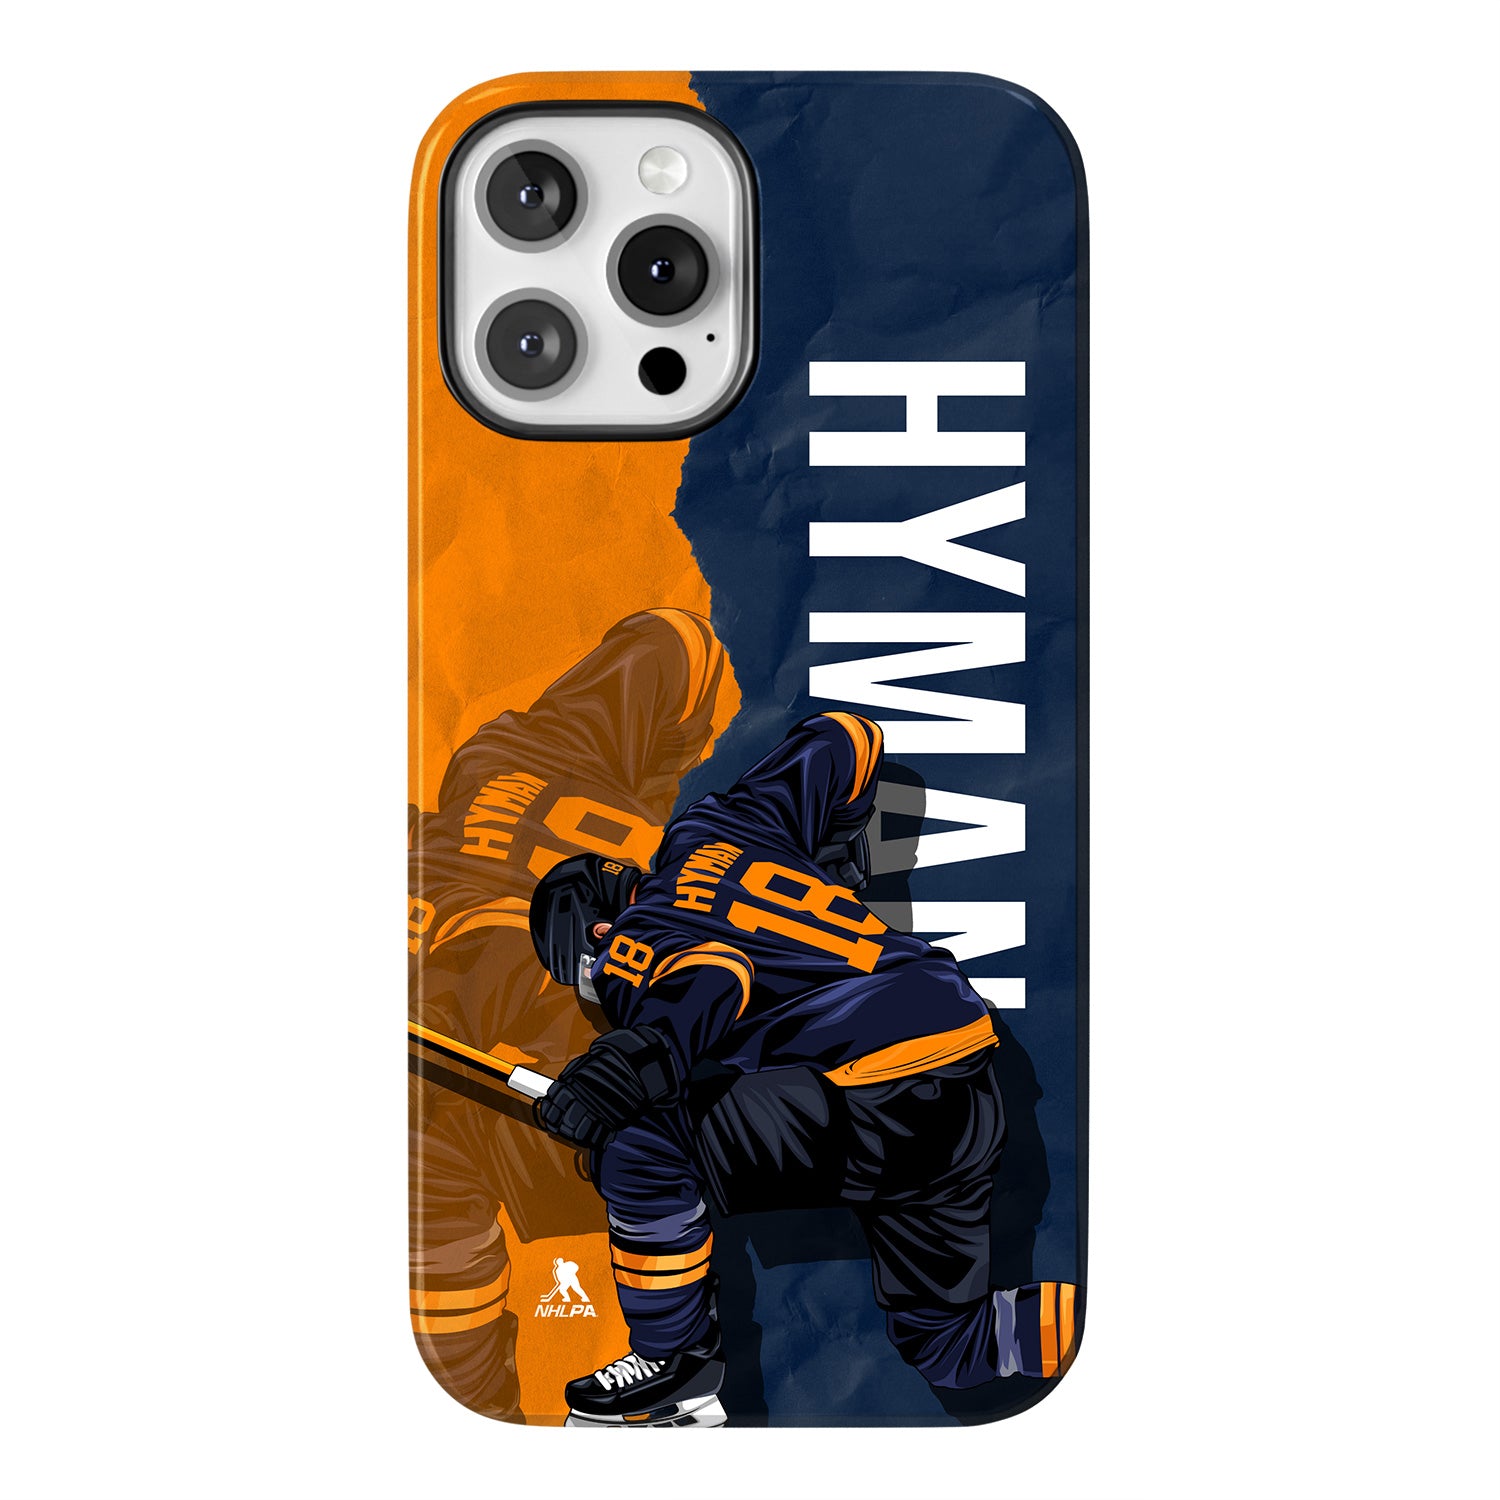 Hyman Star Series 3.0 Phone Case